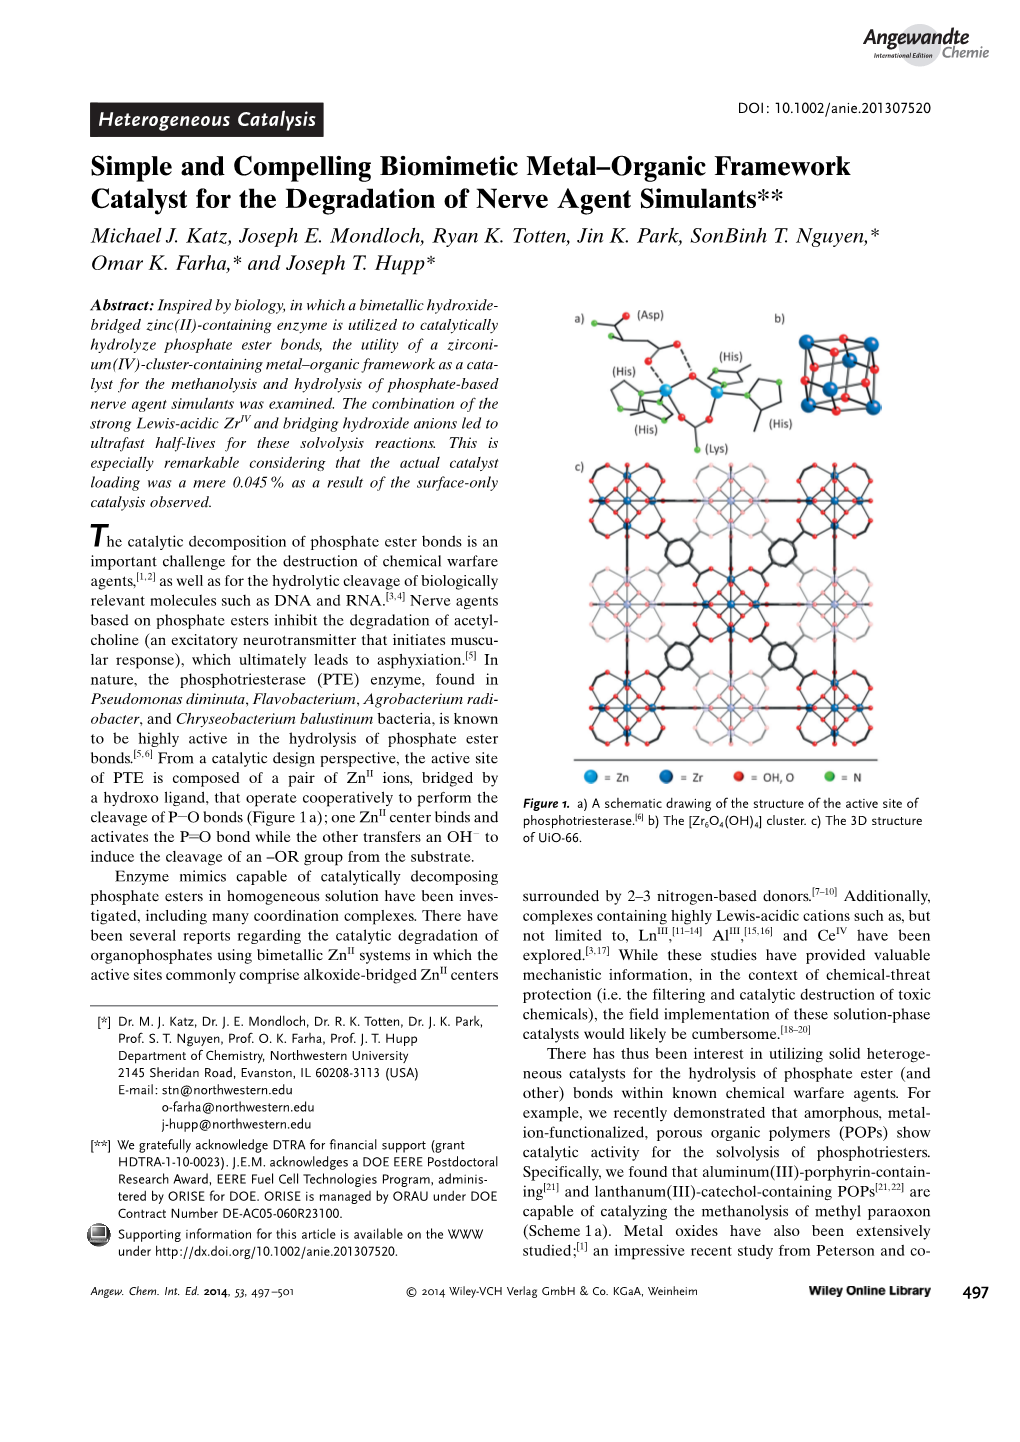 Simple and Compelling Biomimetic Metalorganic Framework Catalyst